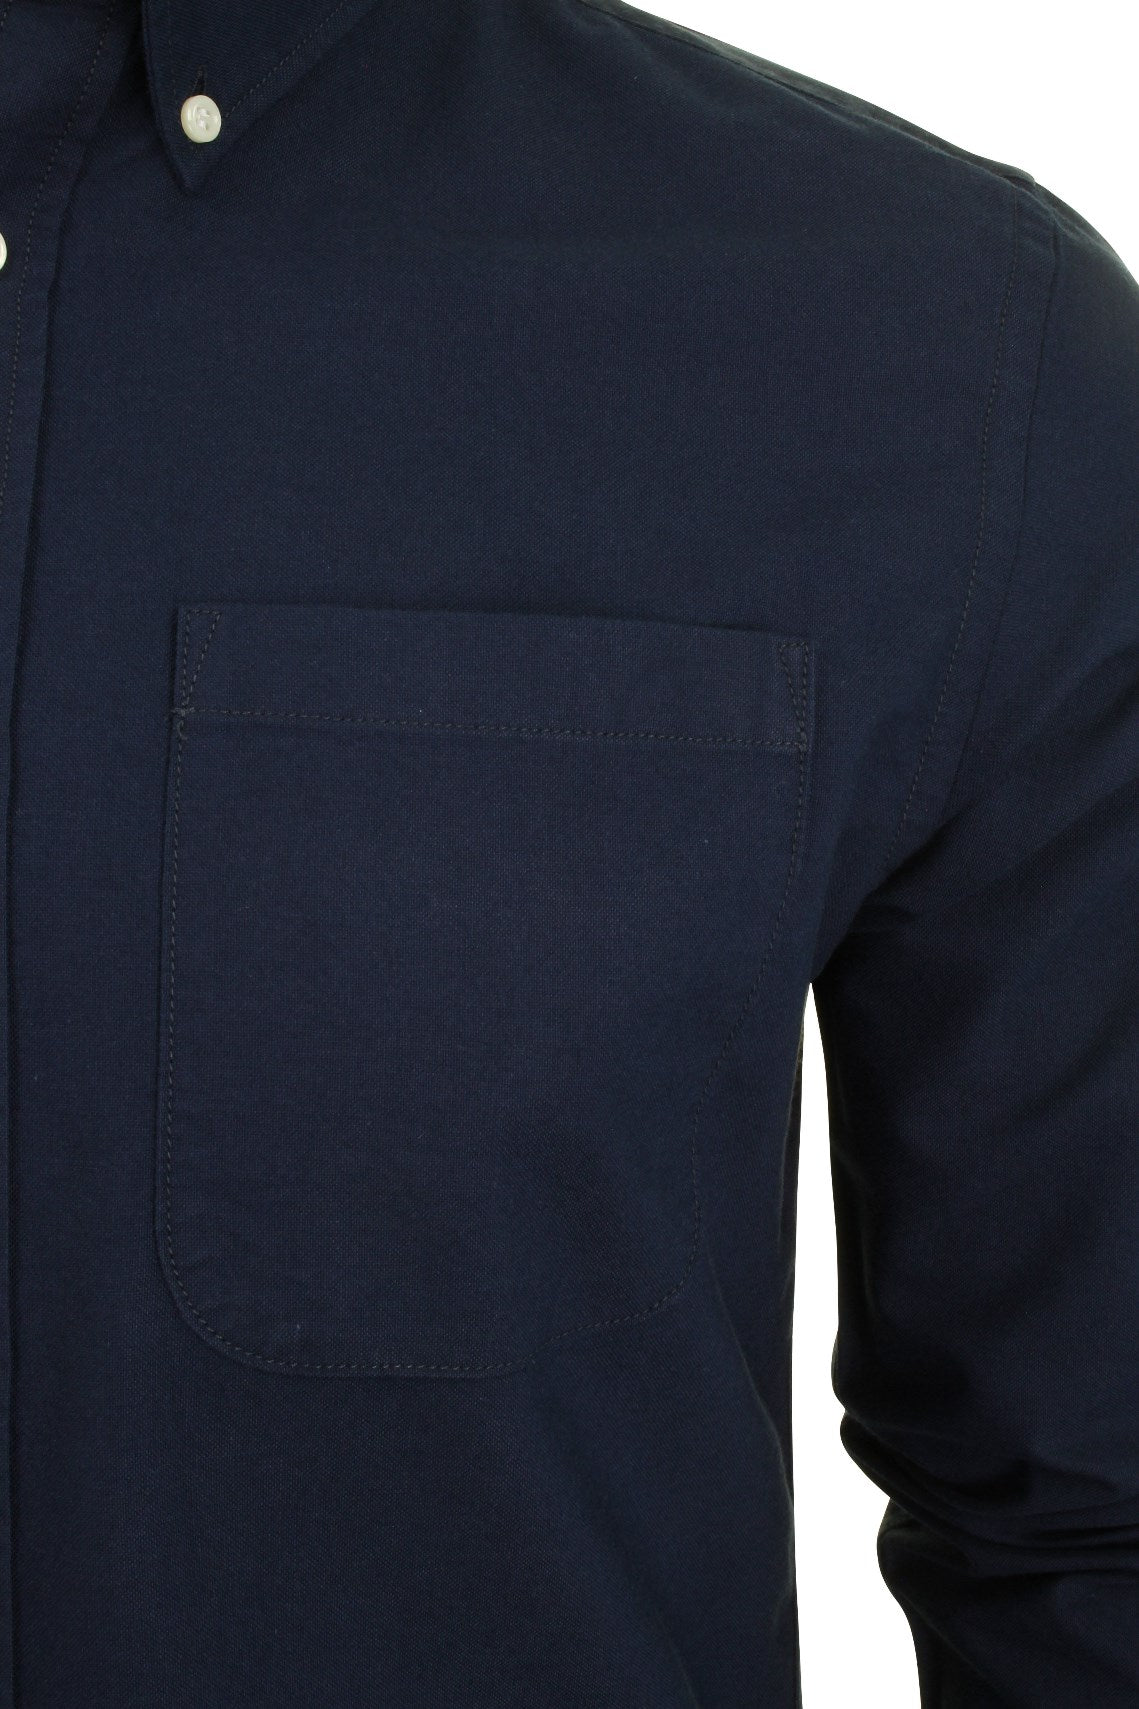 Jack & Jones Oxford Long Sleeved Shirt (Navy Blazer, S), 02, 12138086, Navy Blazer